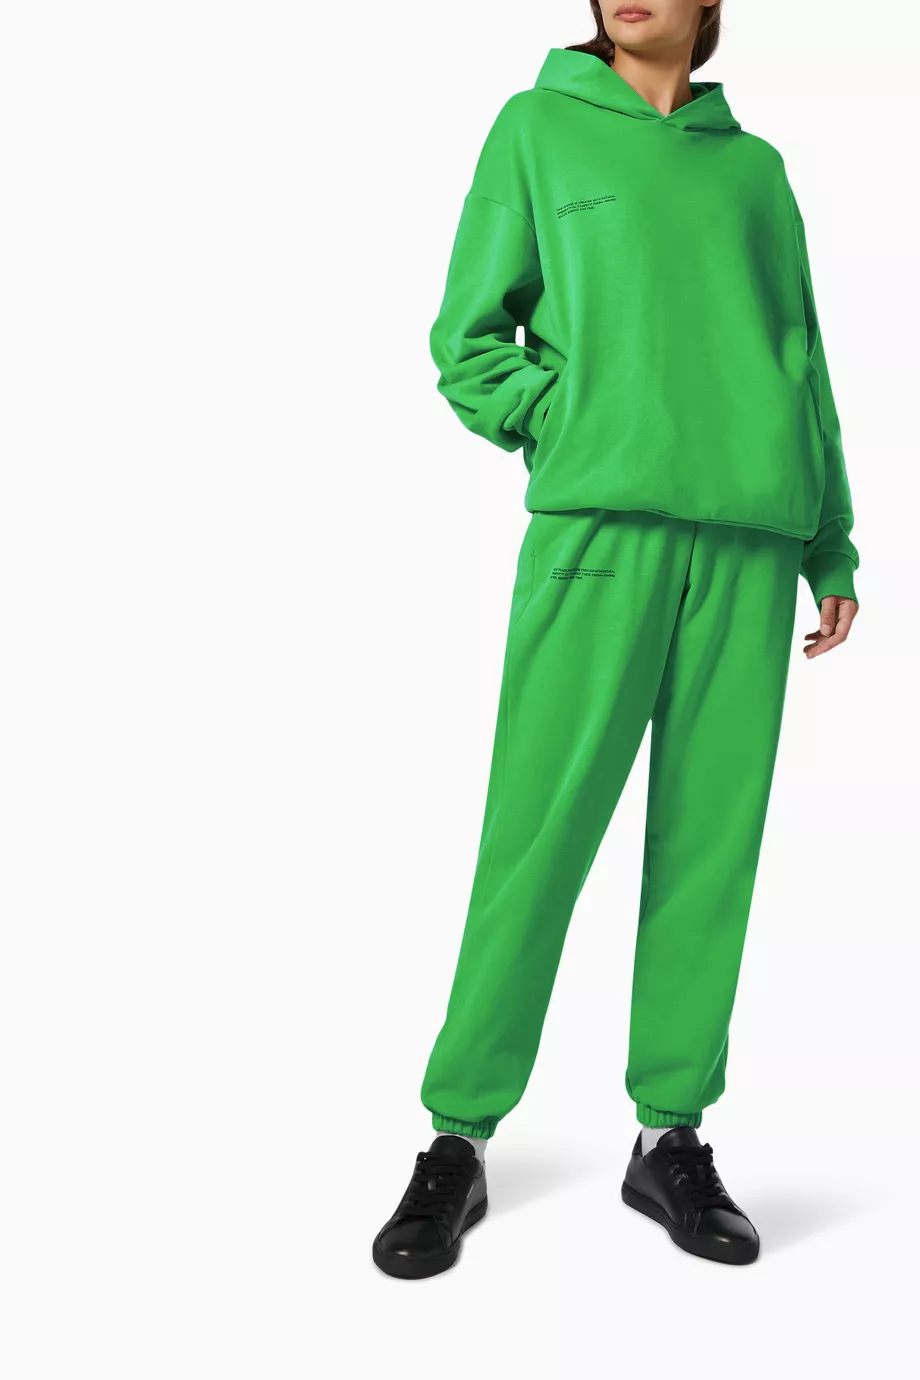 Kids' 365 Midweight Track Pants—jade green